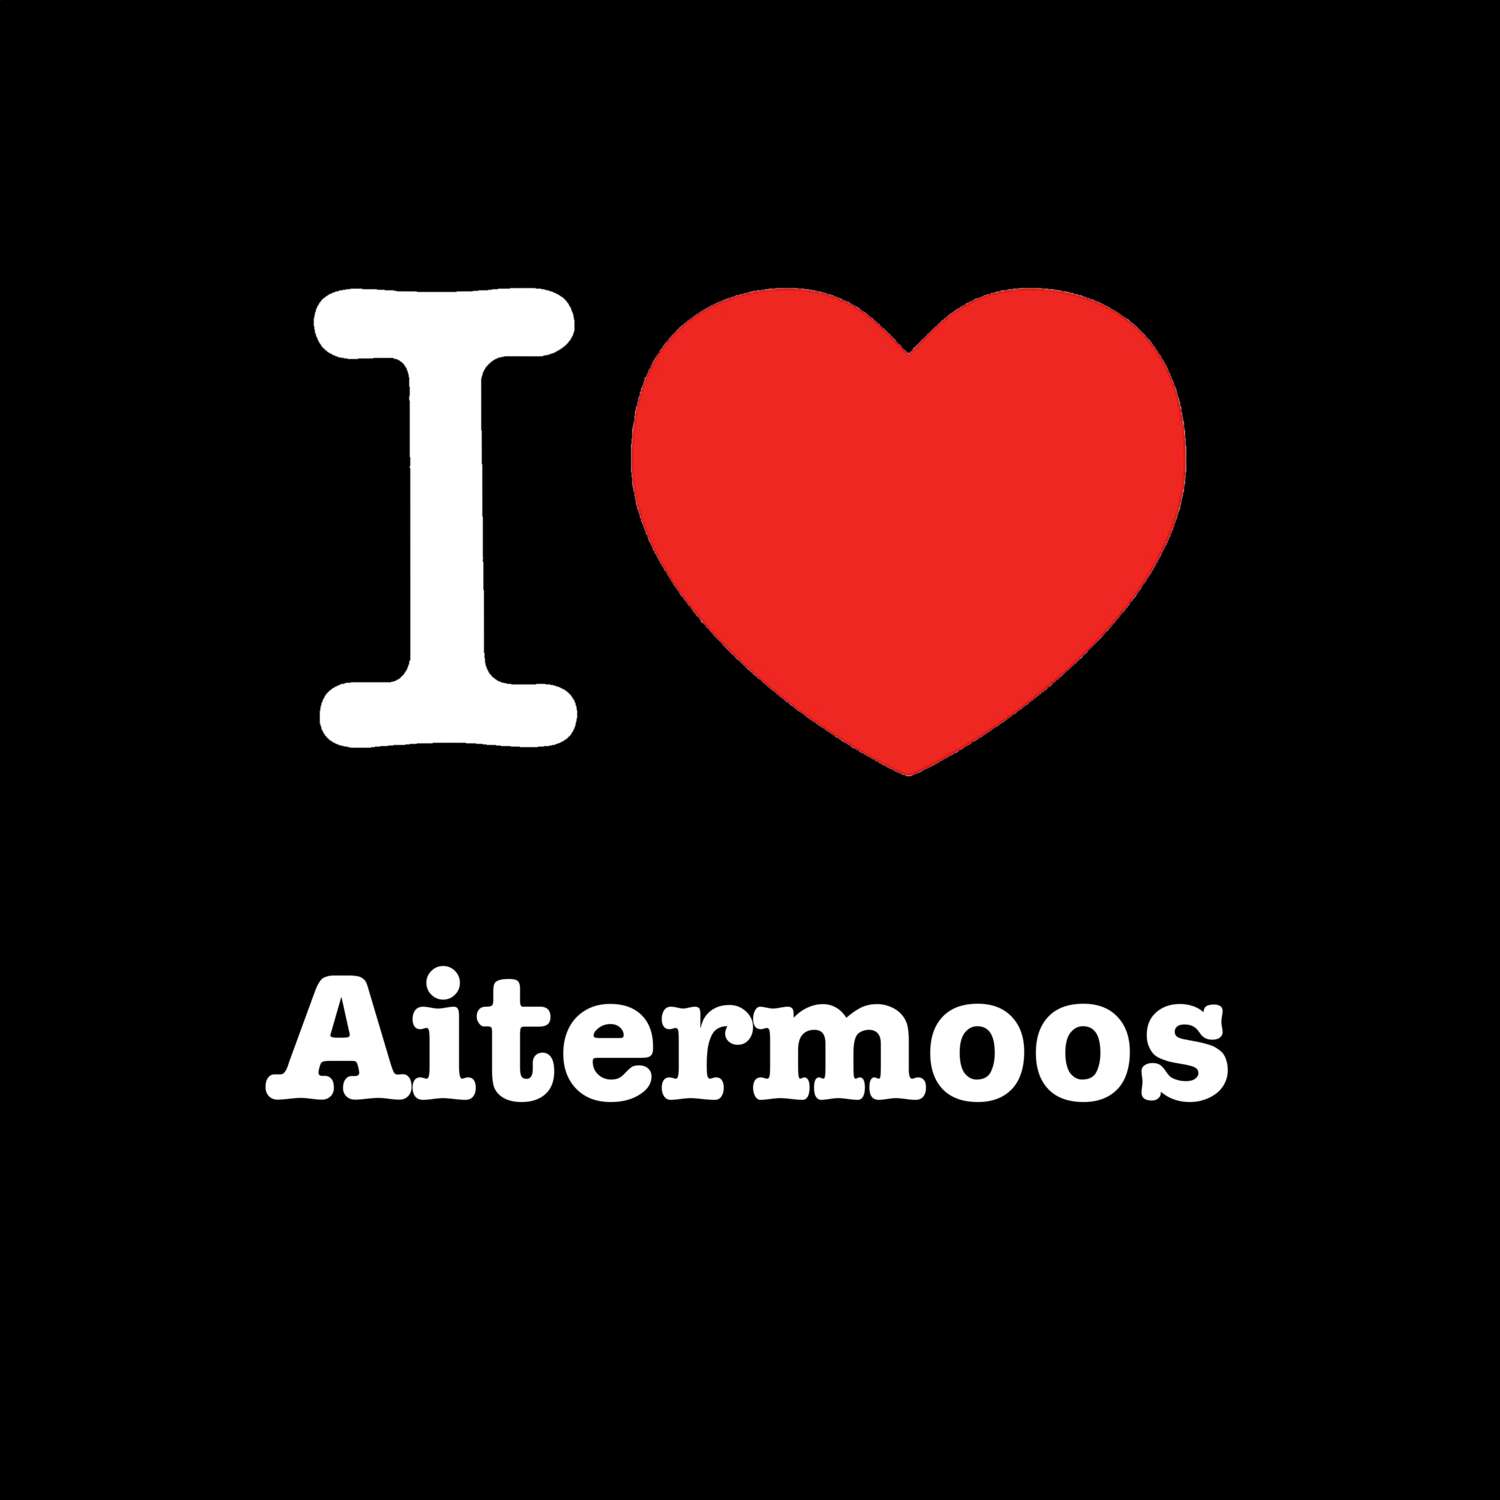 Aitermoos T-Shirt »I love«